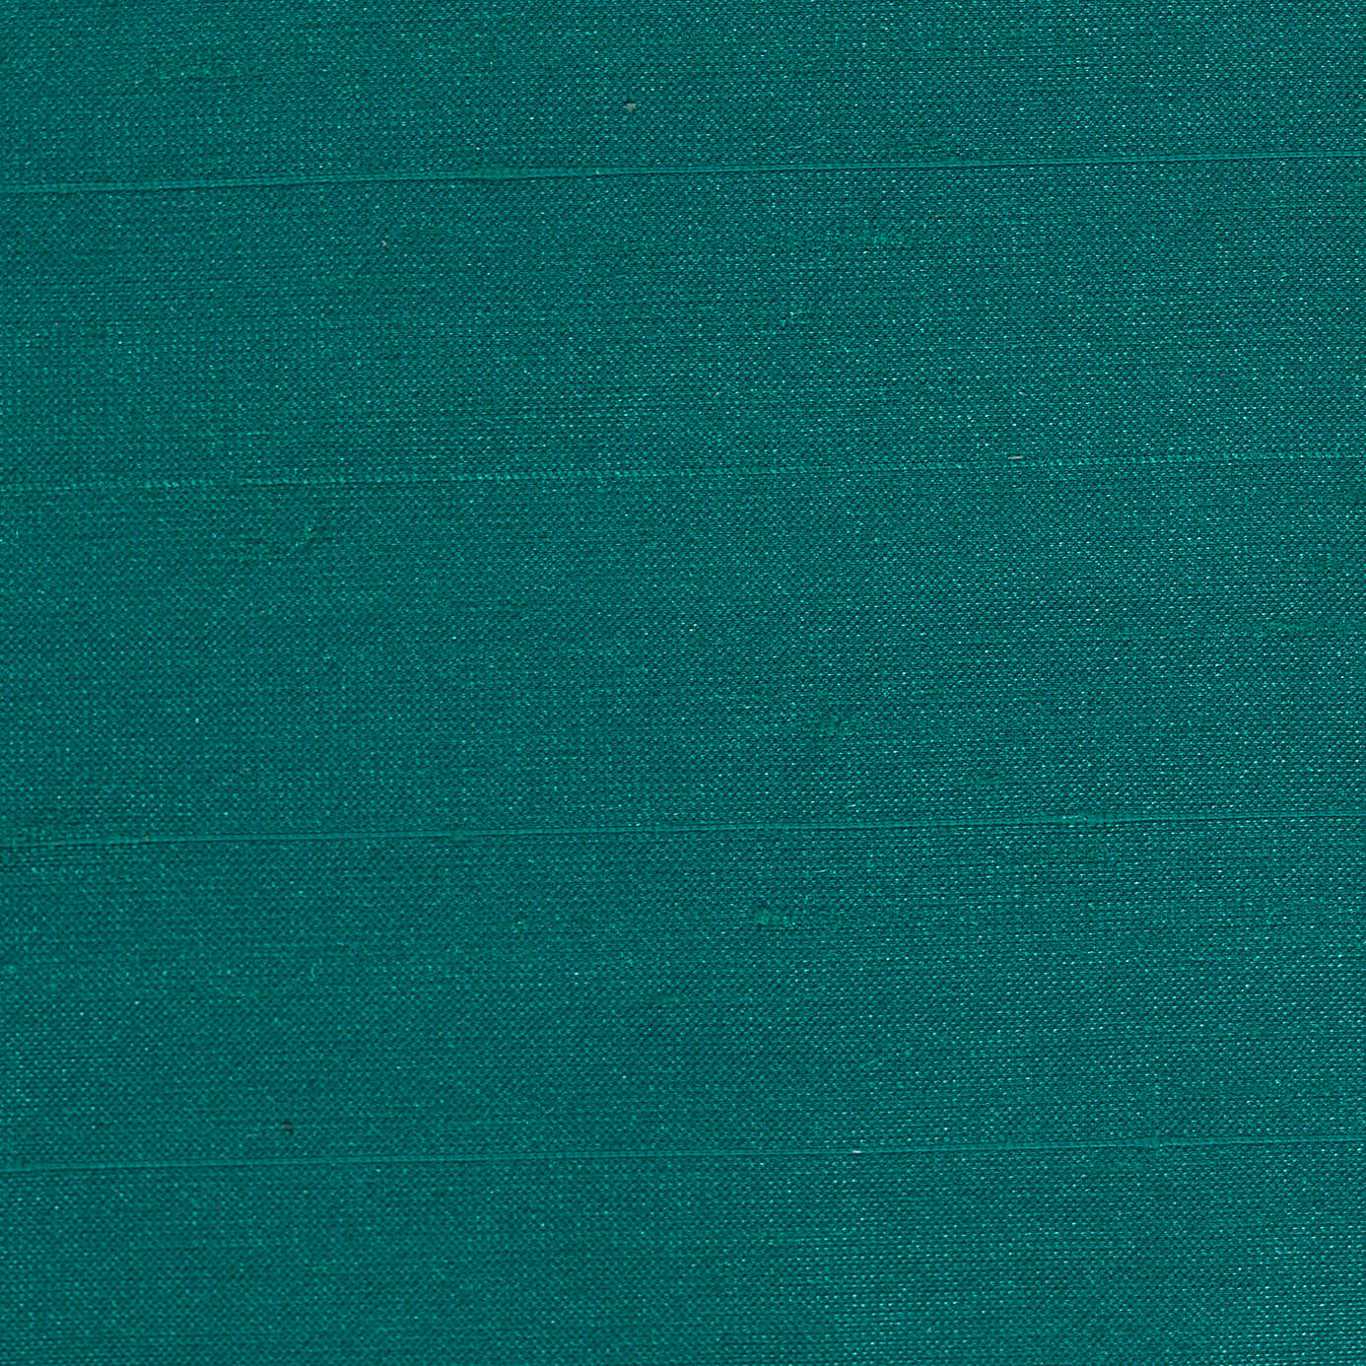 Deflect Fabric by Harlequin - HPOL440535 - Atlantis